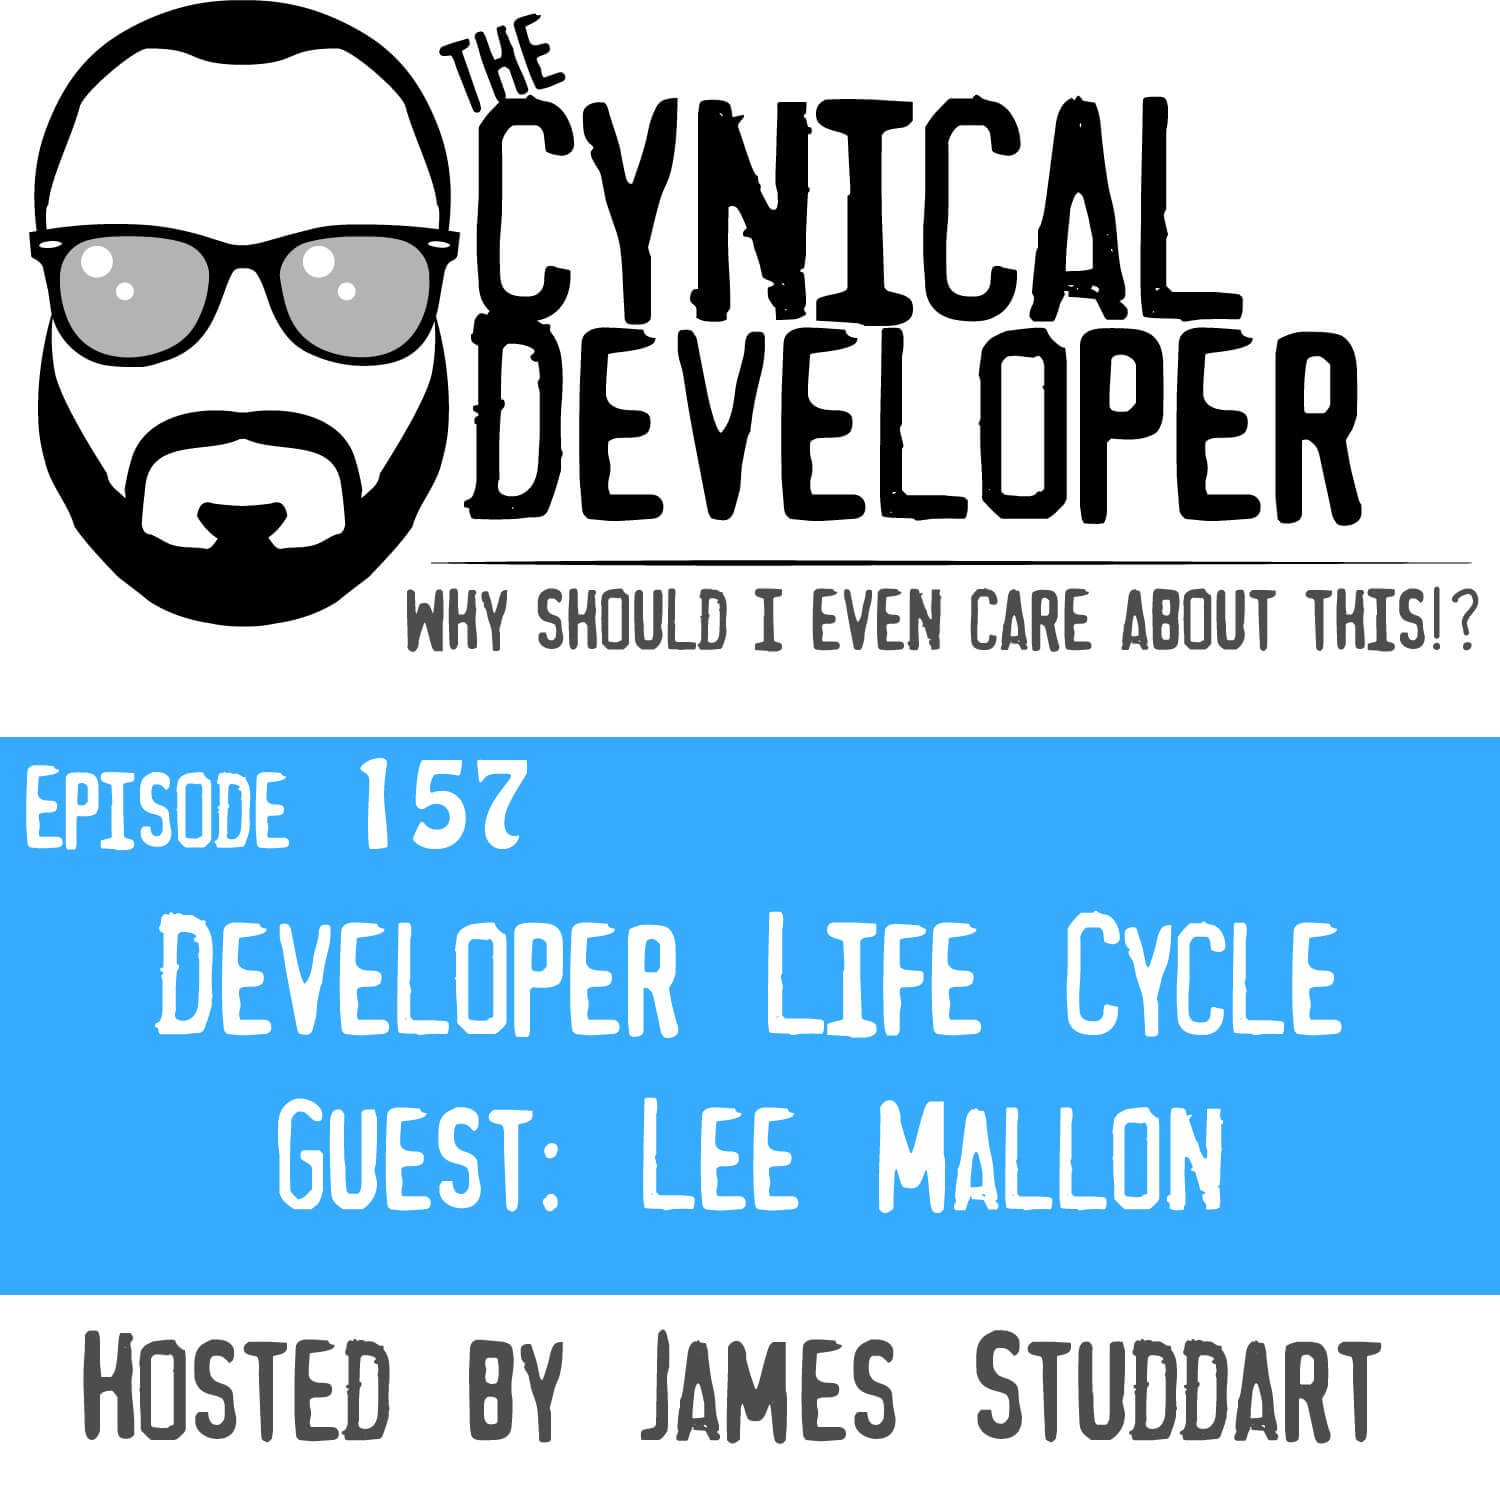 Episode 157 - Developer Life Cycle